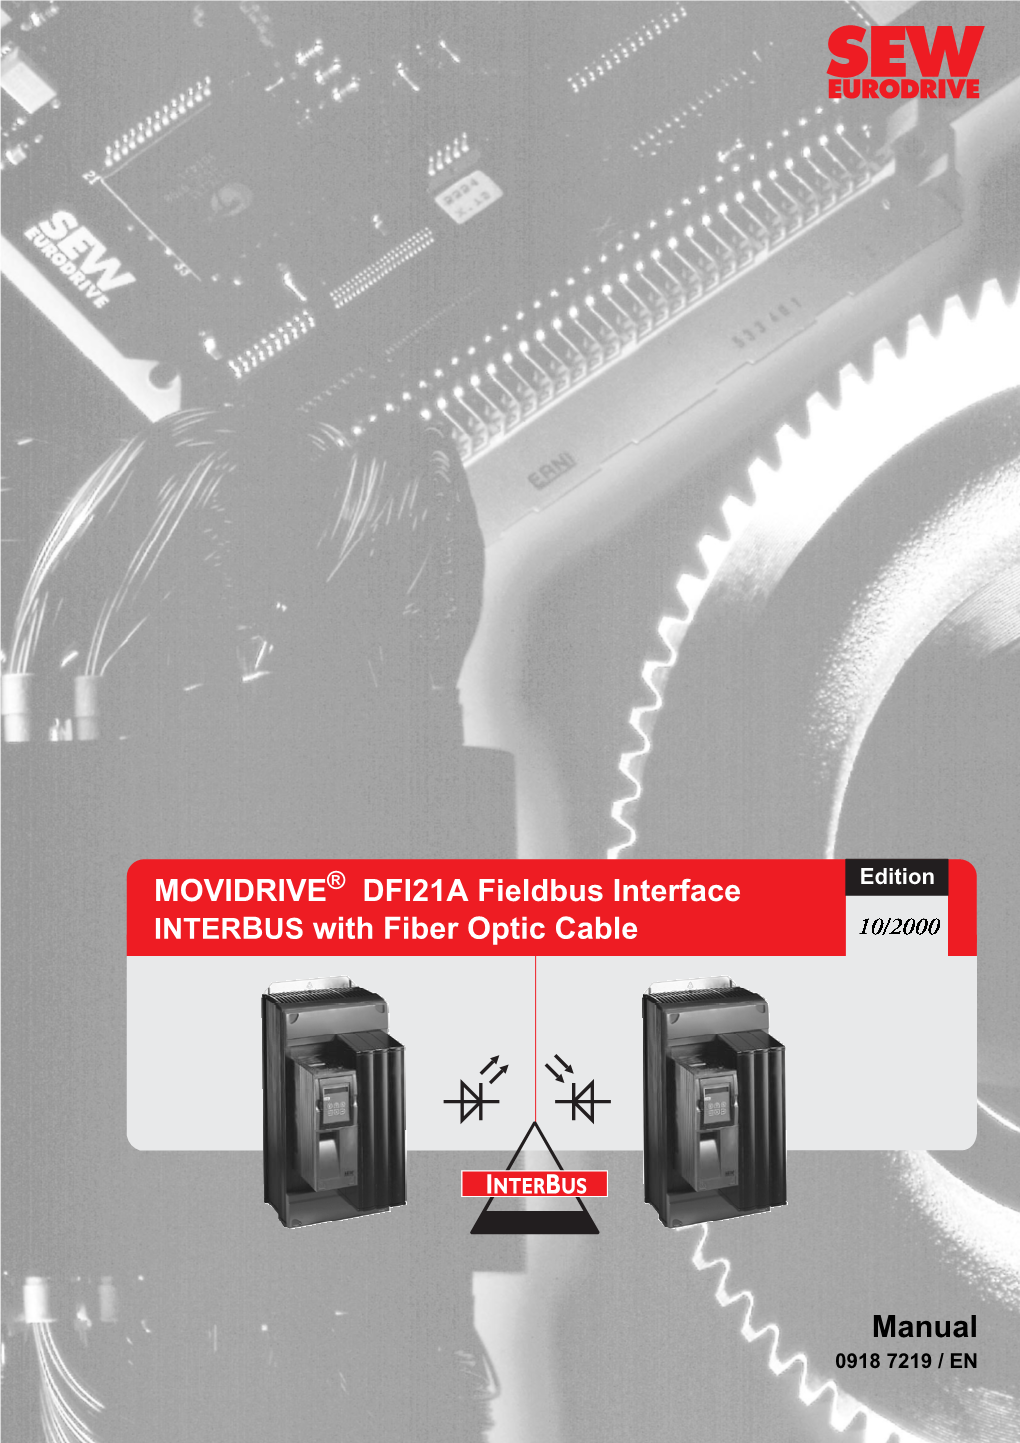 MOVIDRIVE® DFI21A Fieldbus Interface INTERBUS with Fiber Optic Cable / Manuals